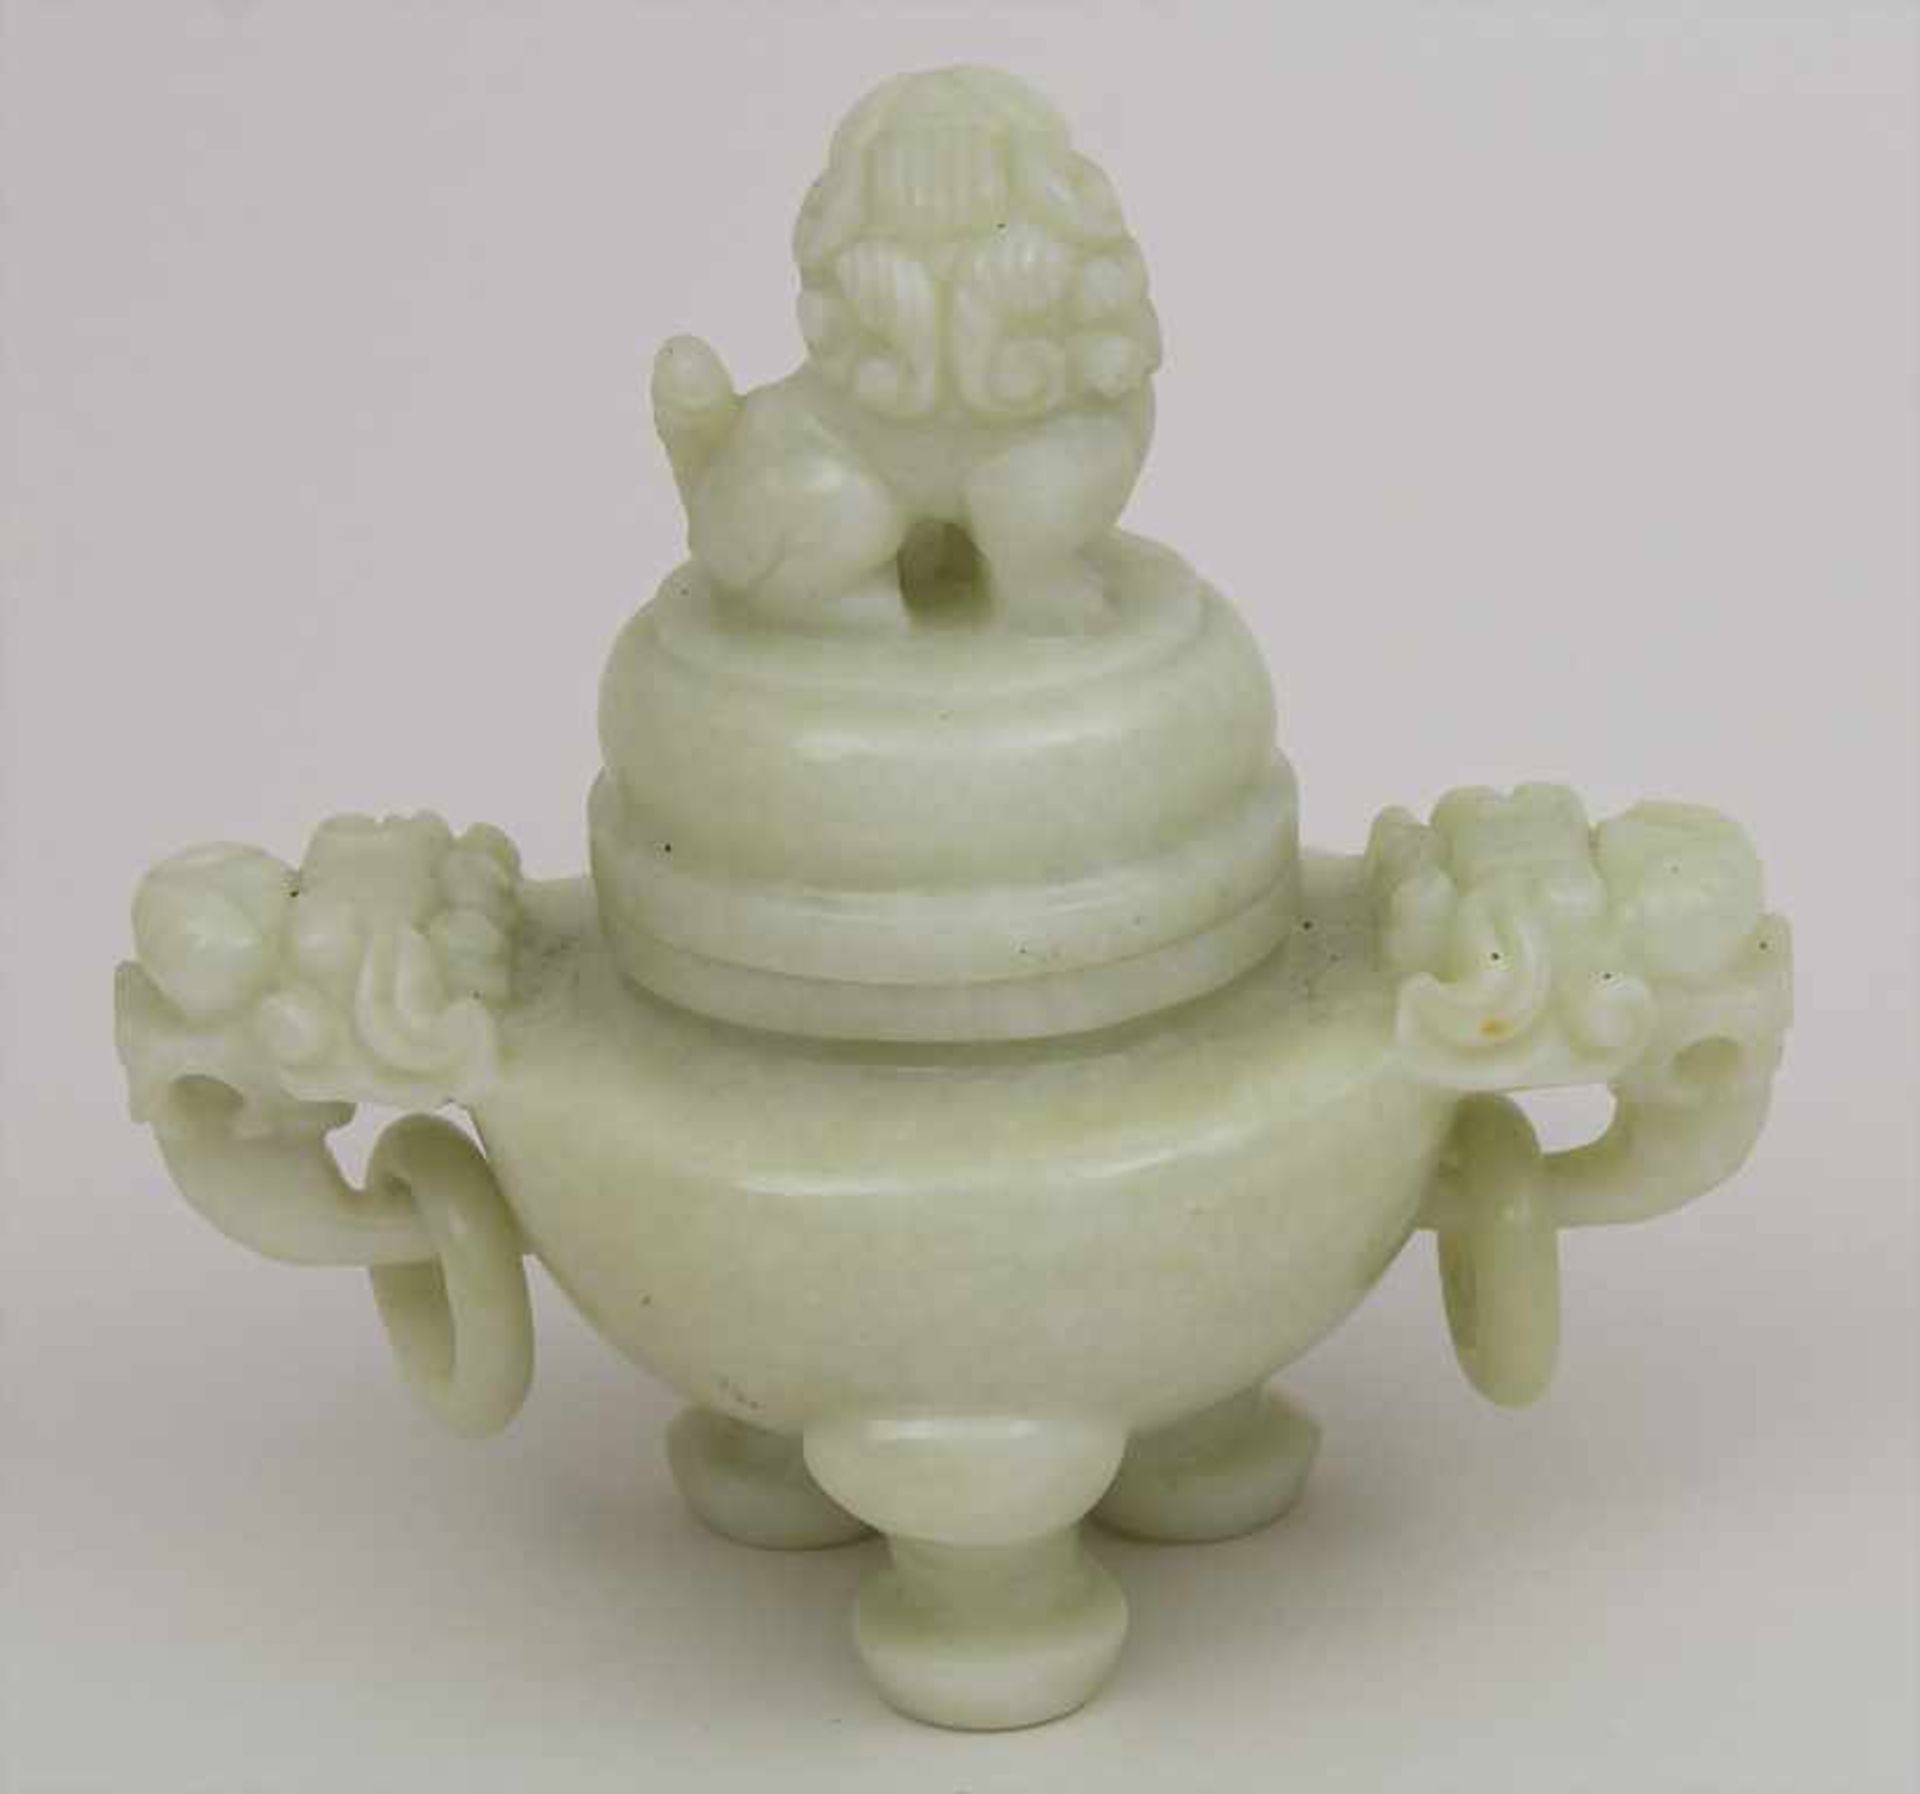 Jade-Deckelgefäß mit Fo-Hund / A jade vessel with Fo-hound, China, 20. Jh. Material: Jade, - Bild 2 aus 2